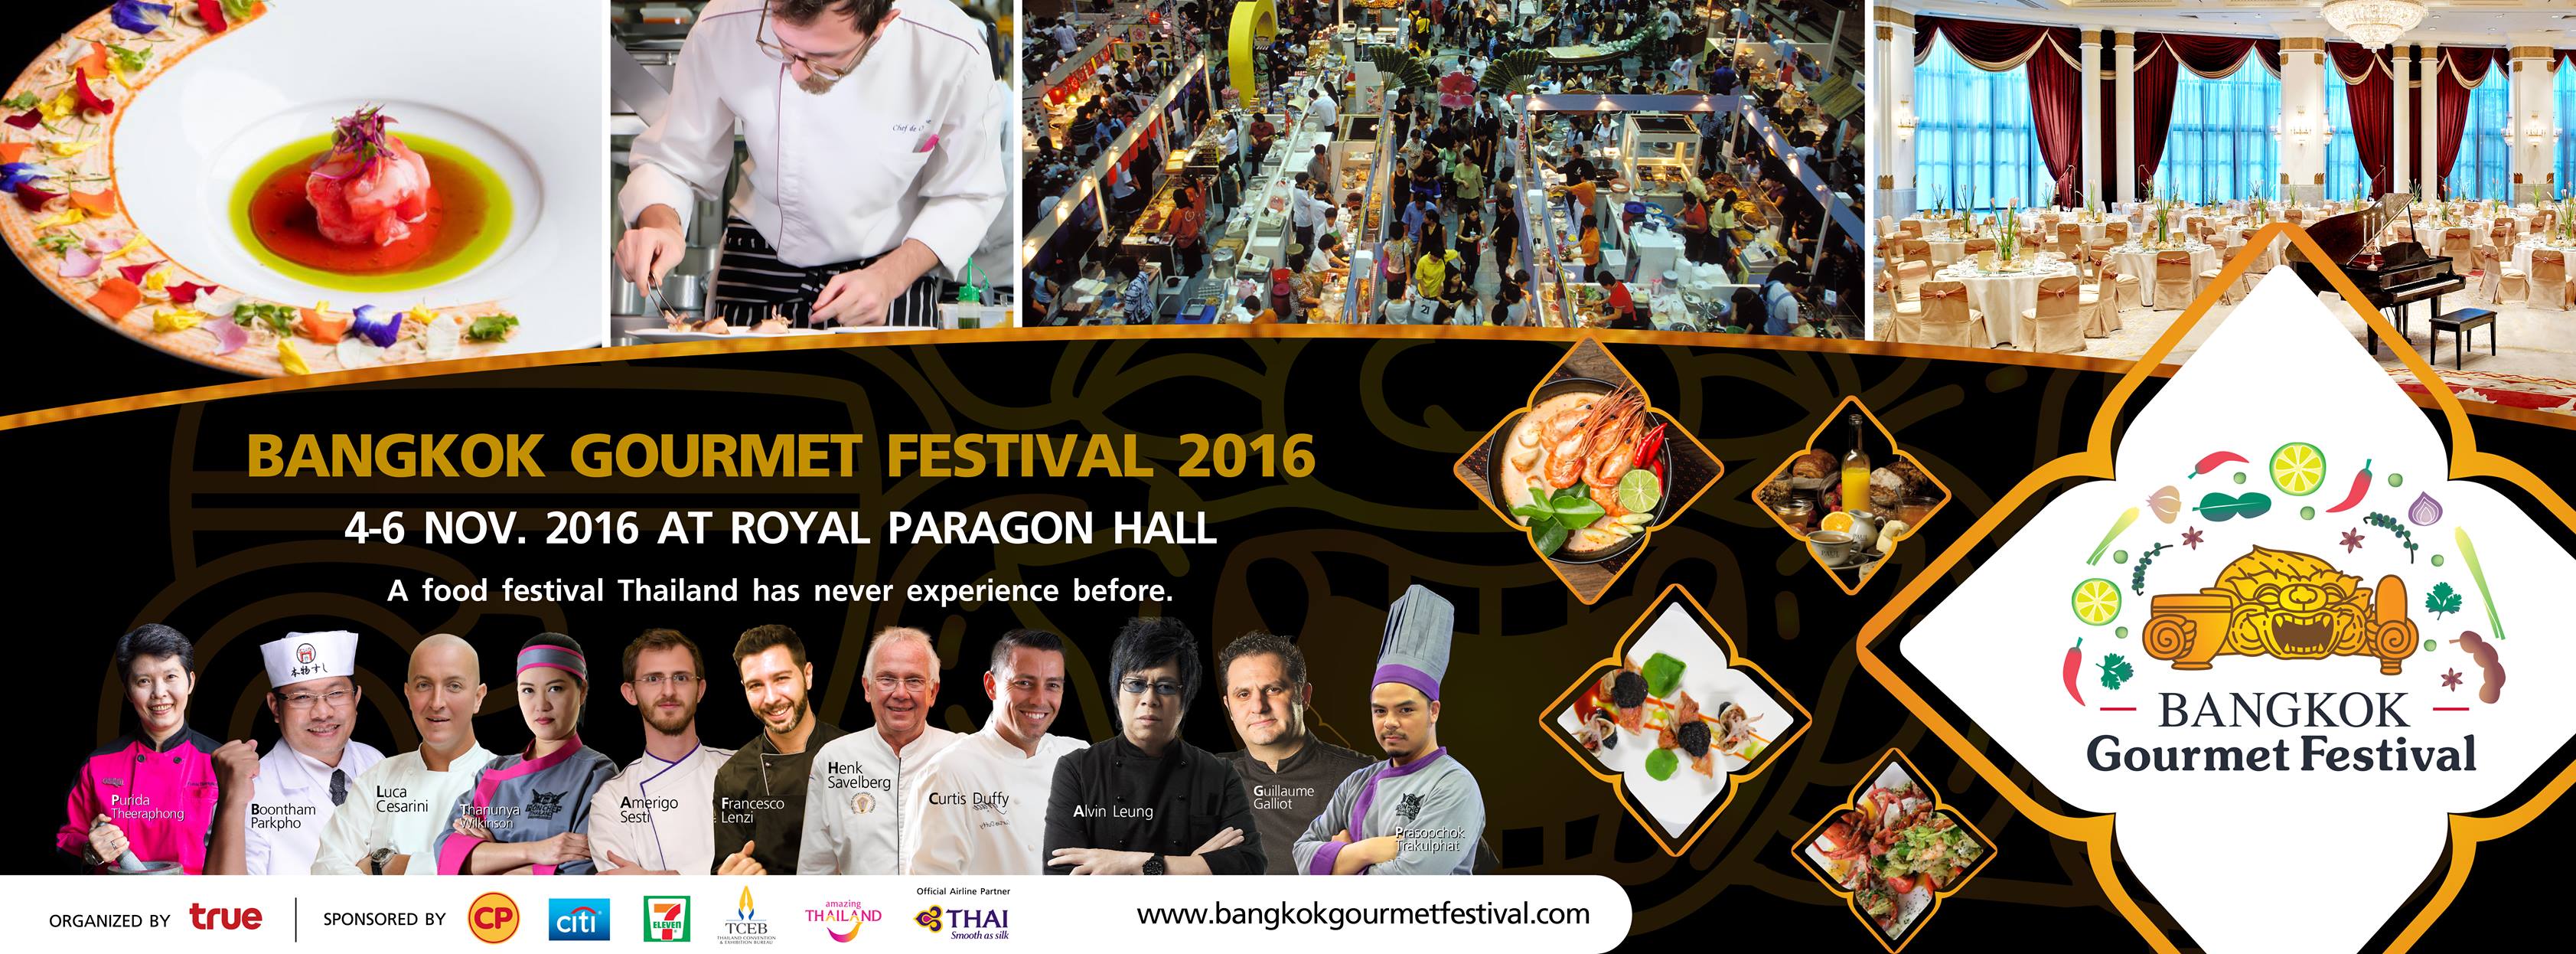 Bangkok Gourmet Festival 2016